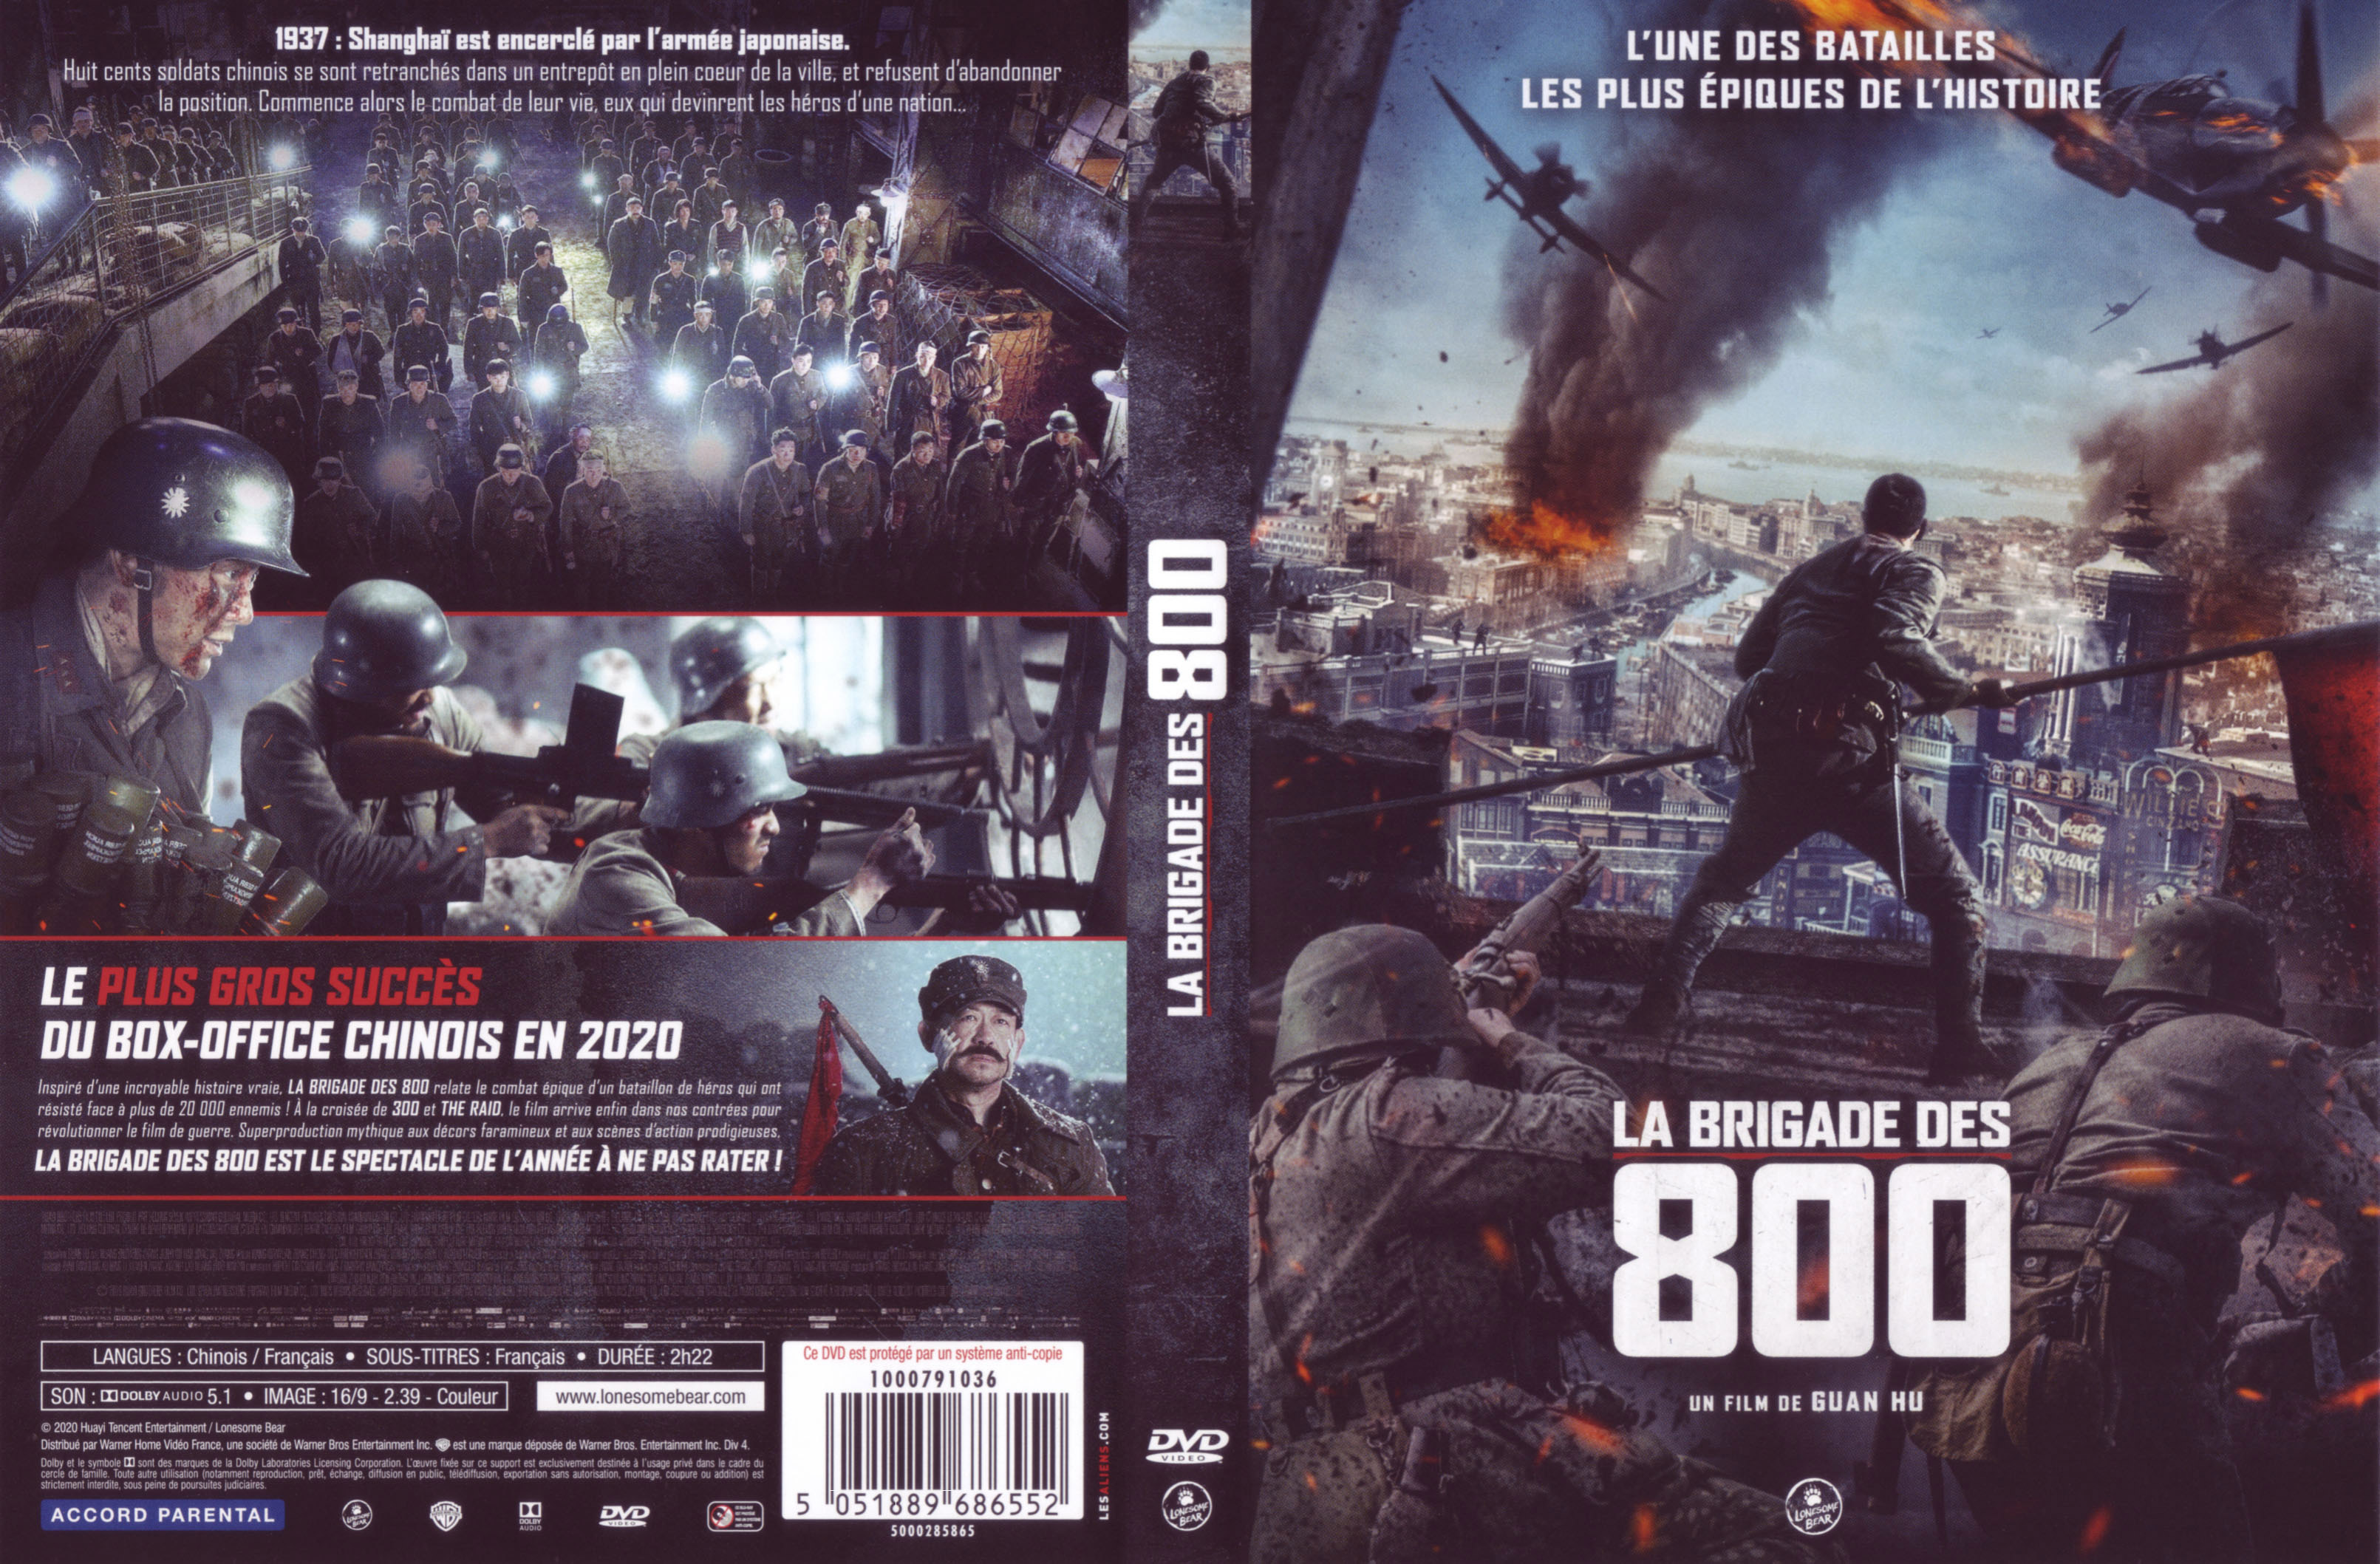 Jaquette DVD La brigade des 800